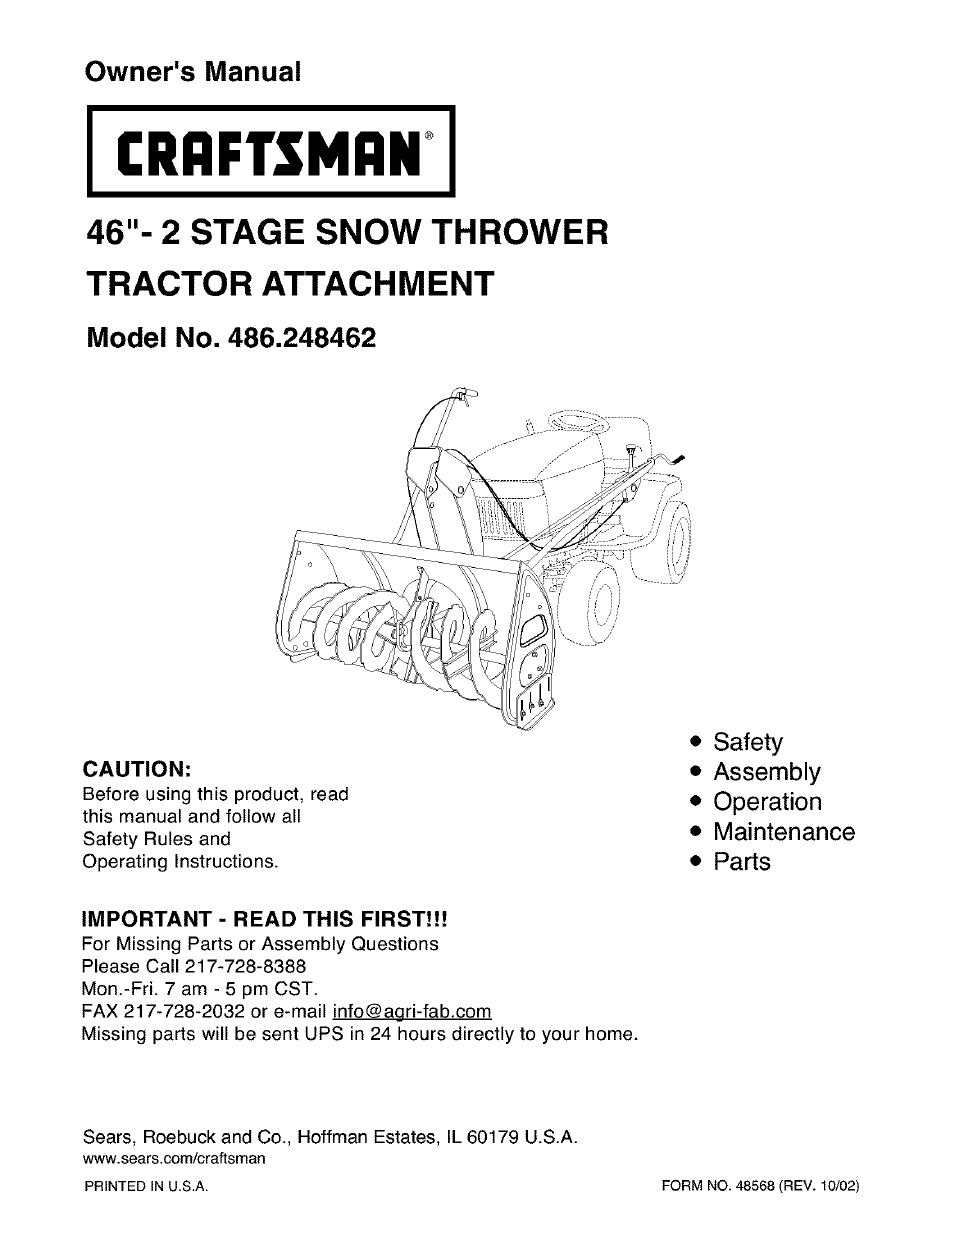 Craftsman 486.248462 User Manual | 24 pages